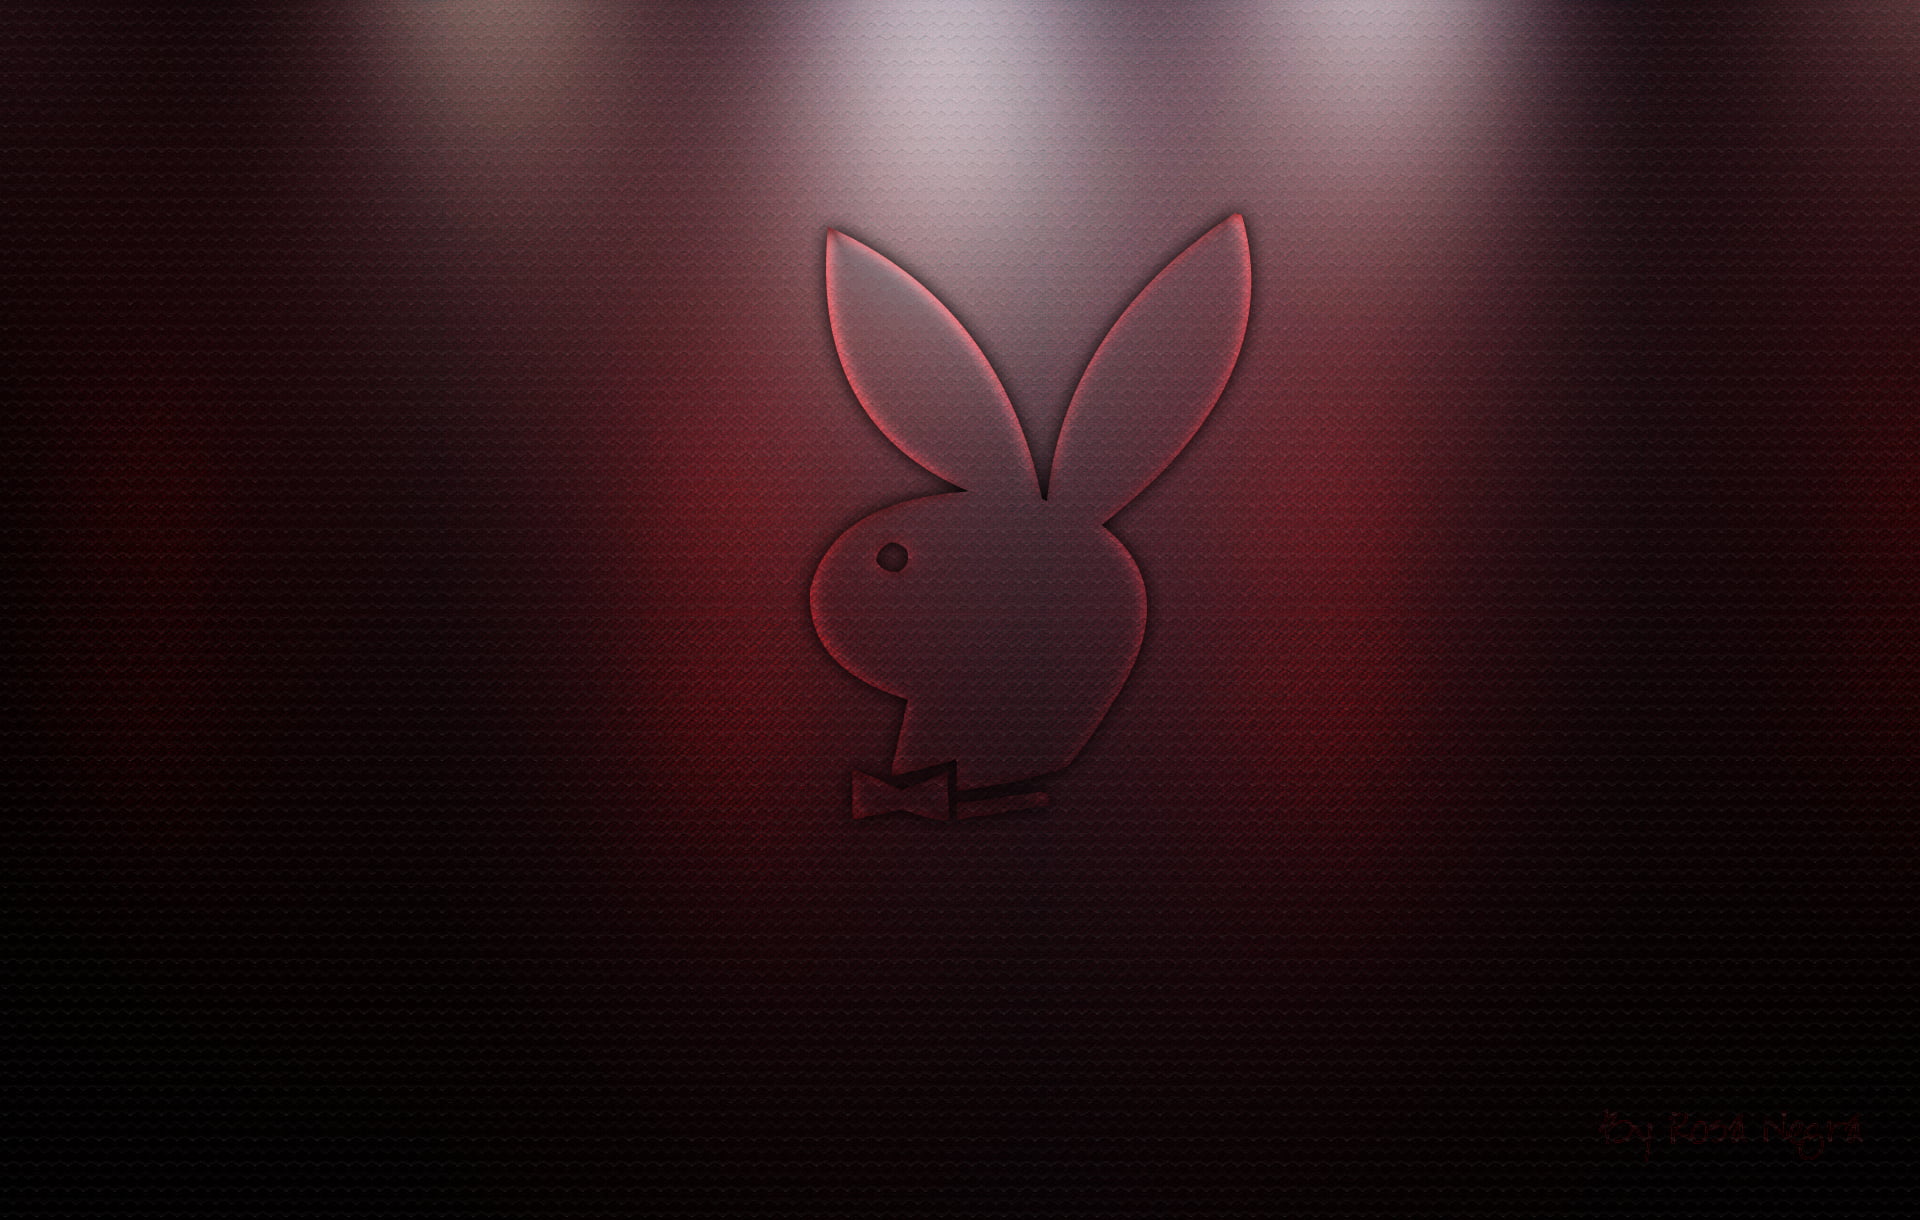 32_mobile-phone_wallpapers, Playboy logo wallpaper designs …